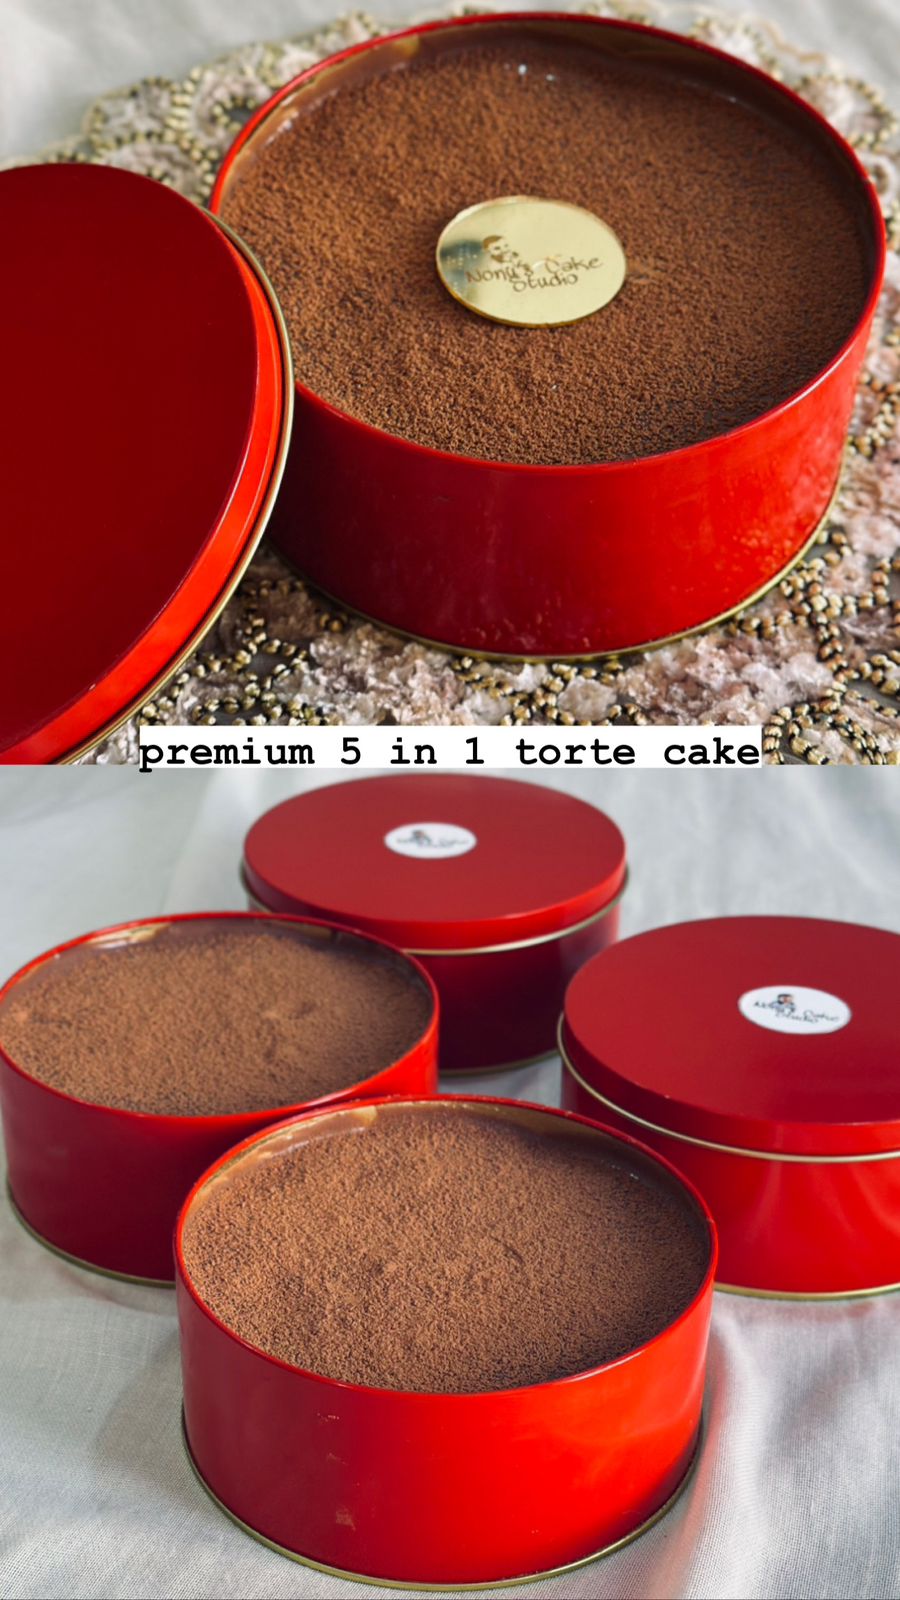 Torta Caprese (Italian Chocolate Torte) | Emma Duckworth Bakes